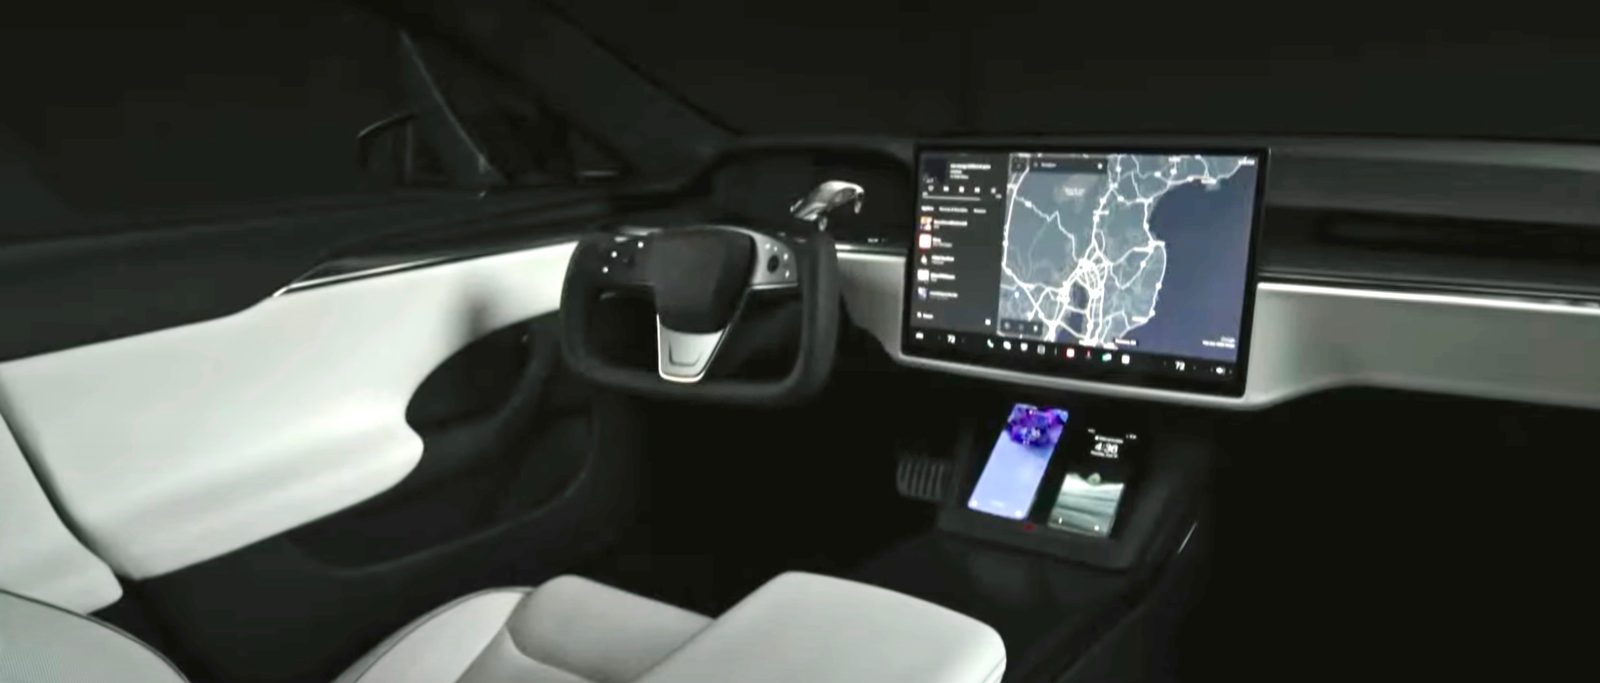 Tesla-Model-S-Plaid-interior.jpg?quality=82&strip=all&w=1600